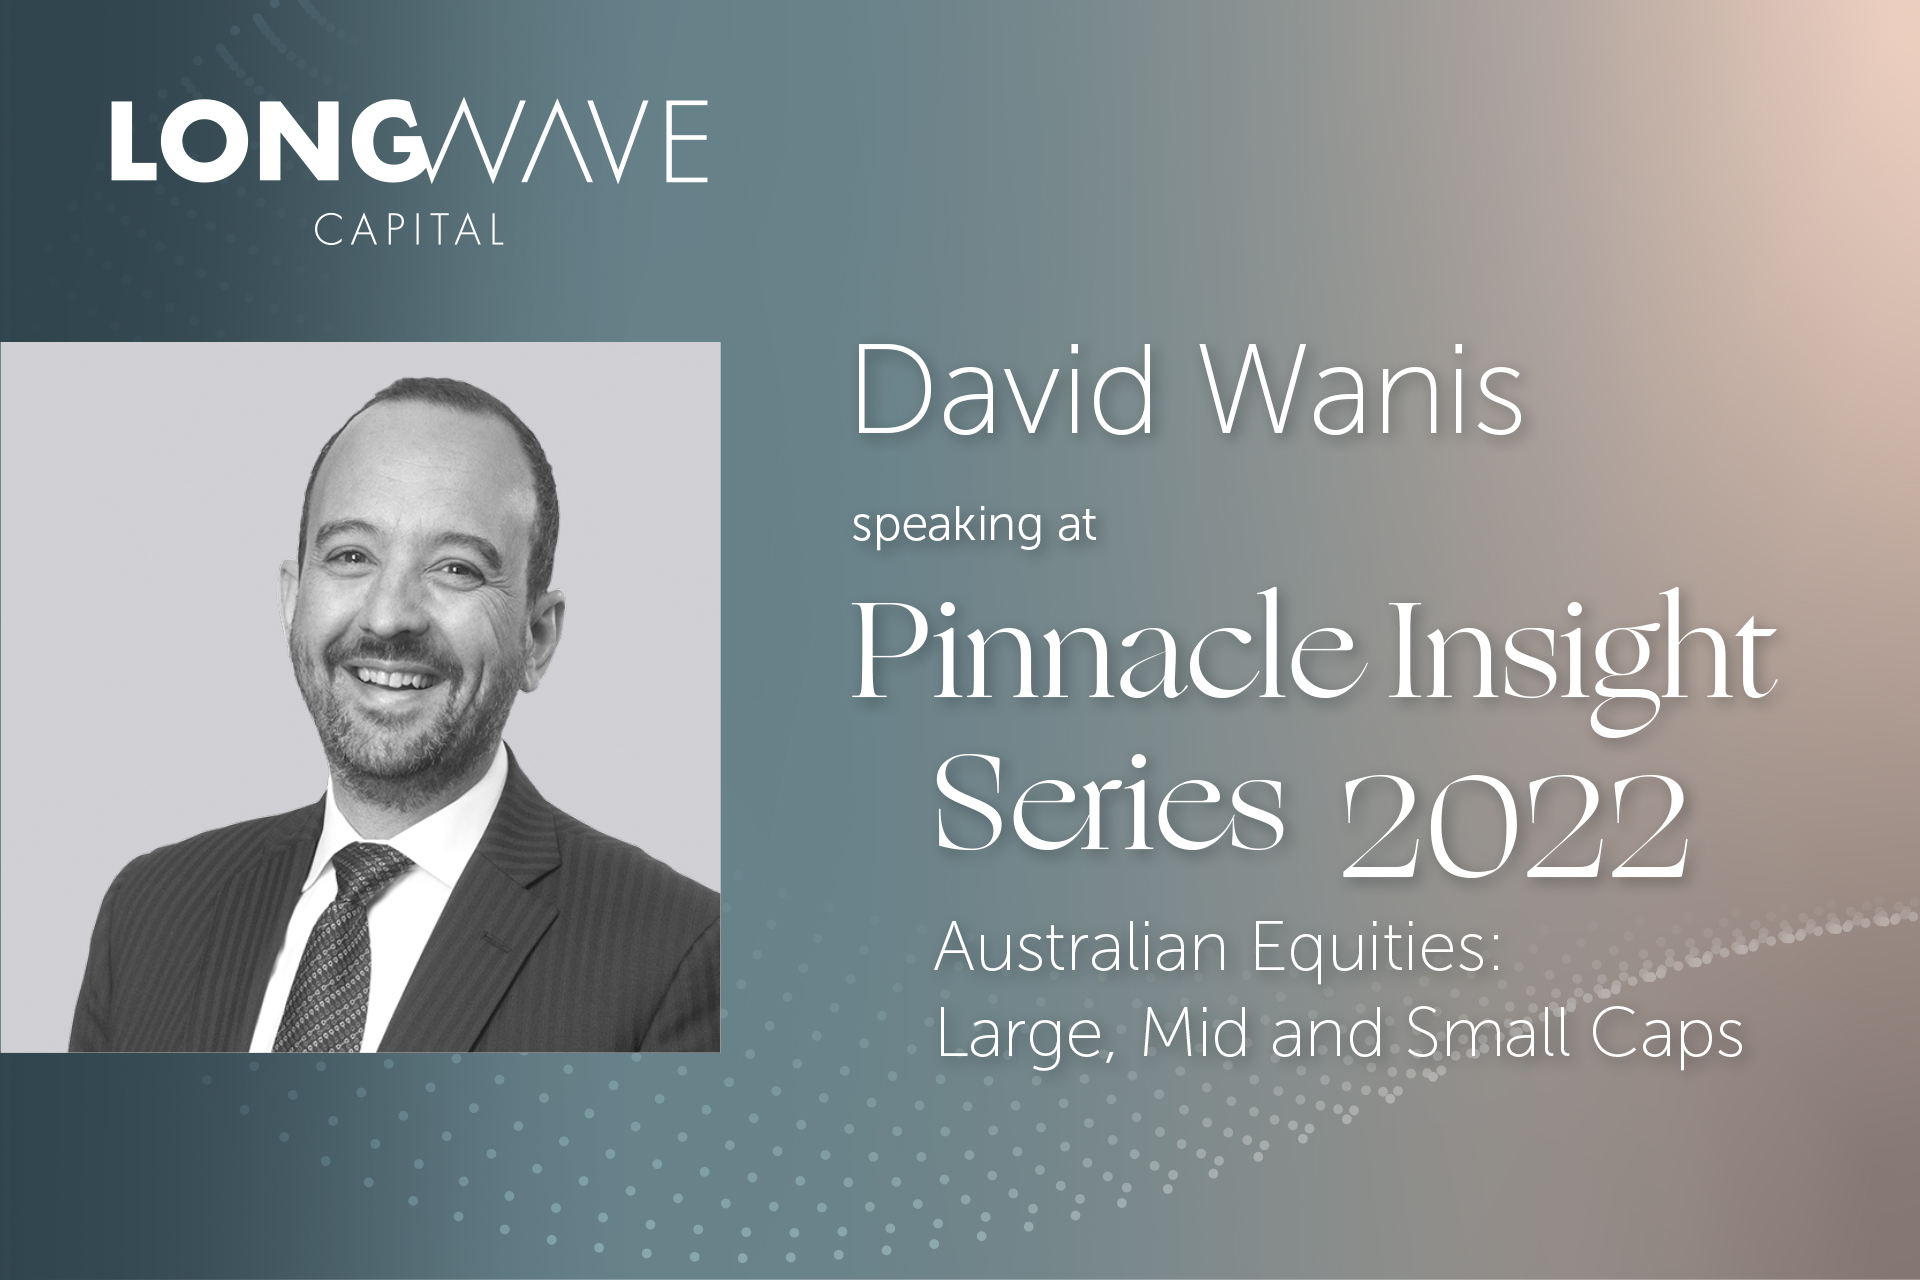 Pinnacle Insight Series 2022